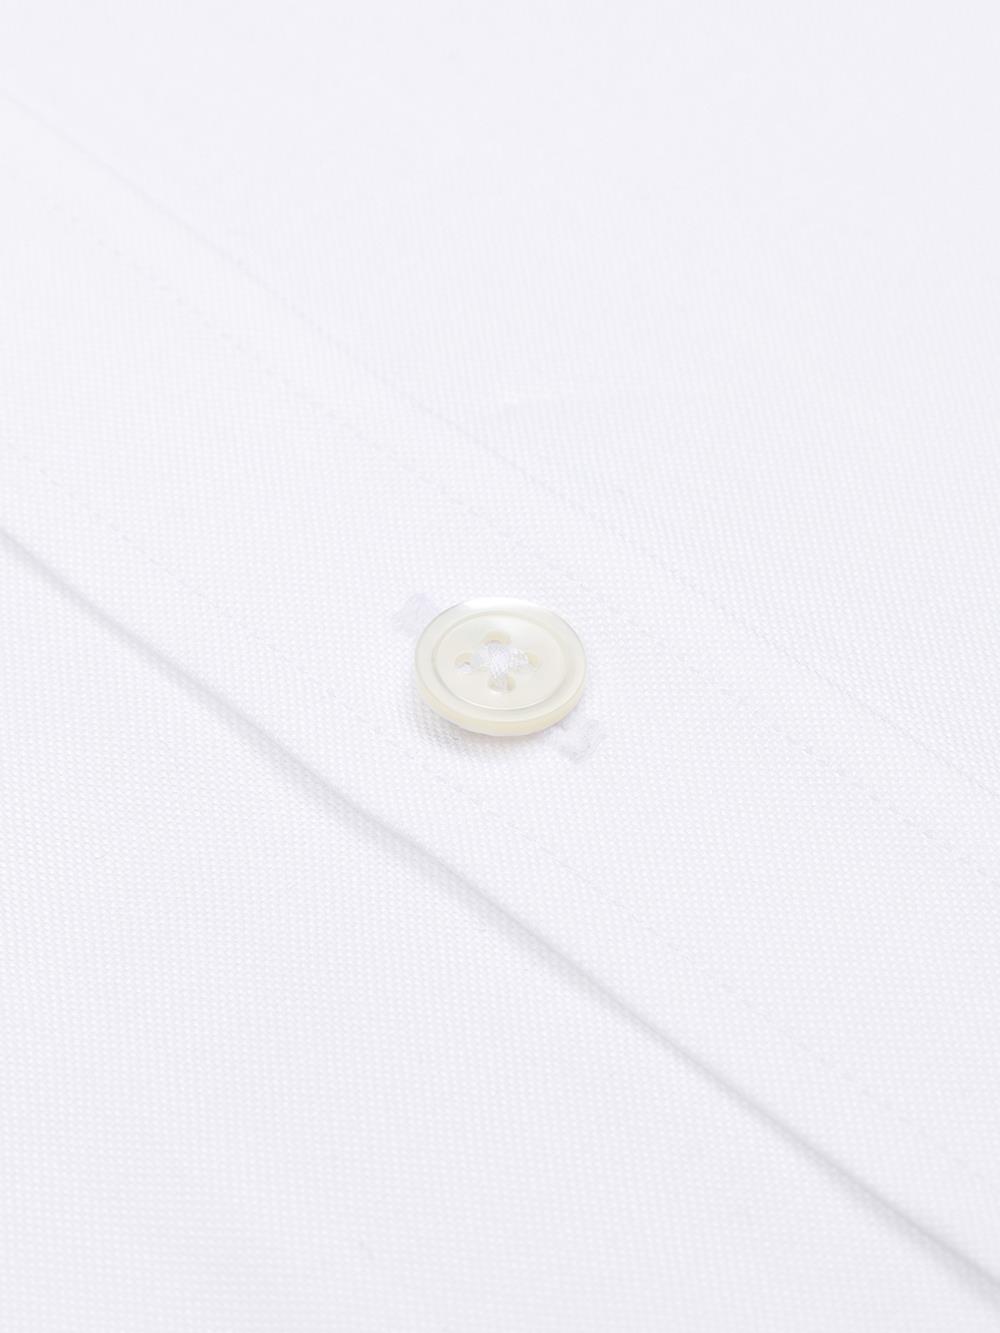 Camicia Royal white pin point